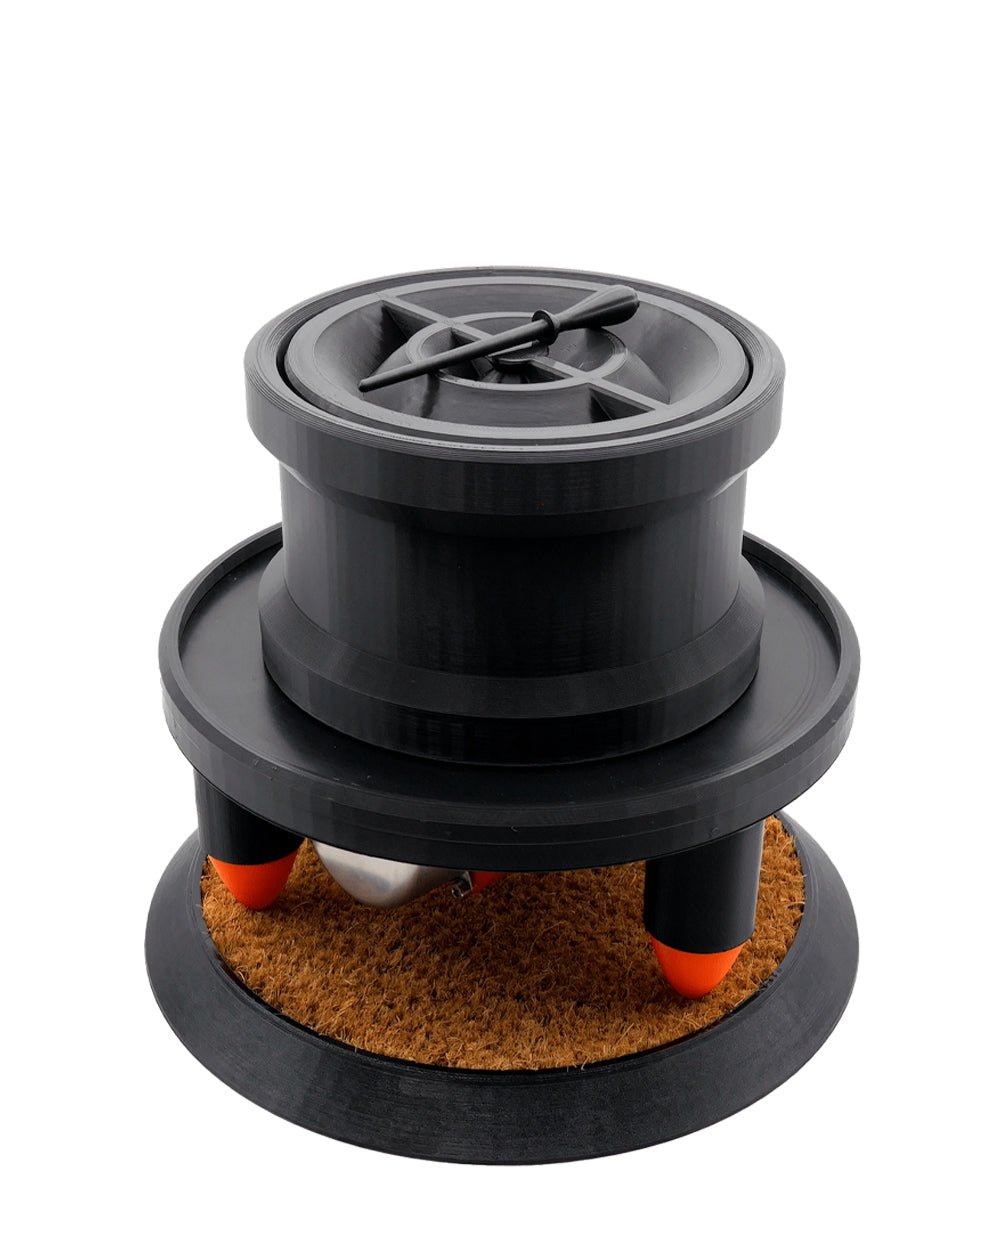 HUMBOLDT | Black Pre-Rolled Cones Filling Machine Starter Kit 84mm | Fill 121 Cones Per Run - 1